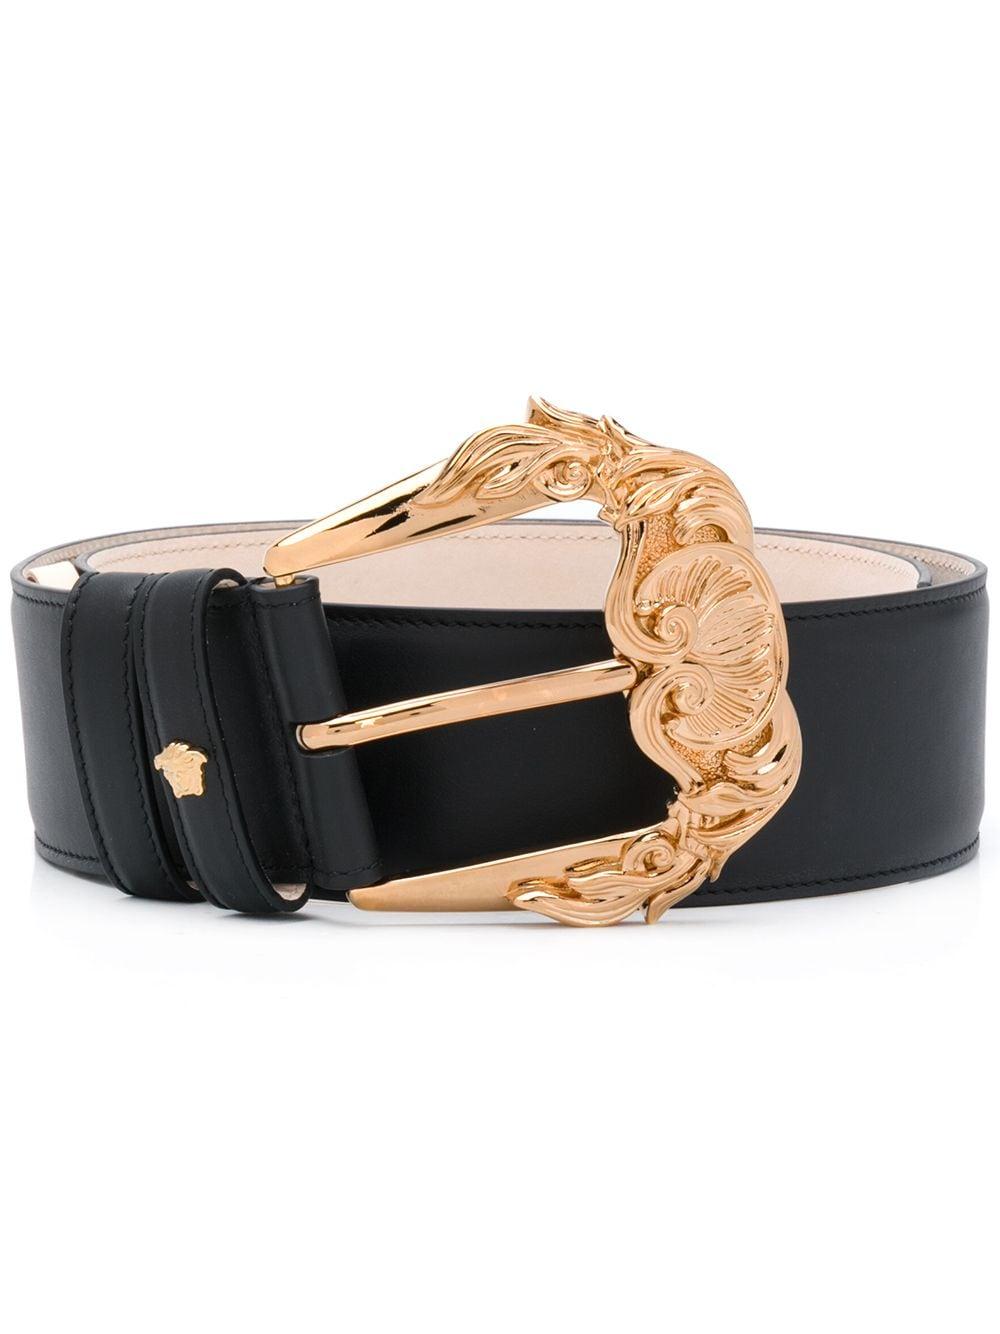 Versace Barocco Buckle Leather Belt in Black & Gold (Black) | Lyst